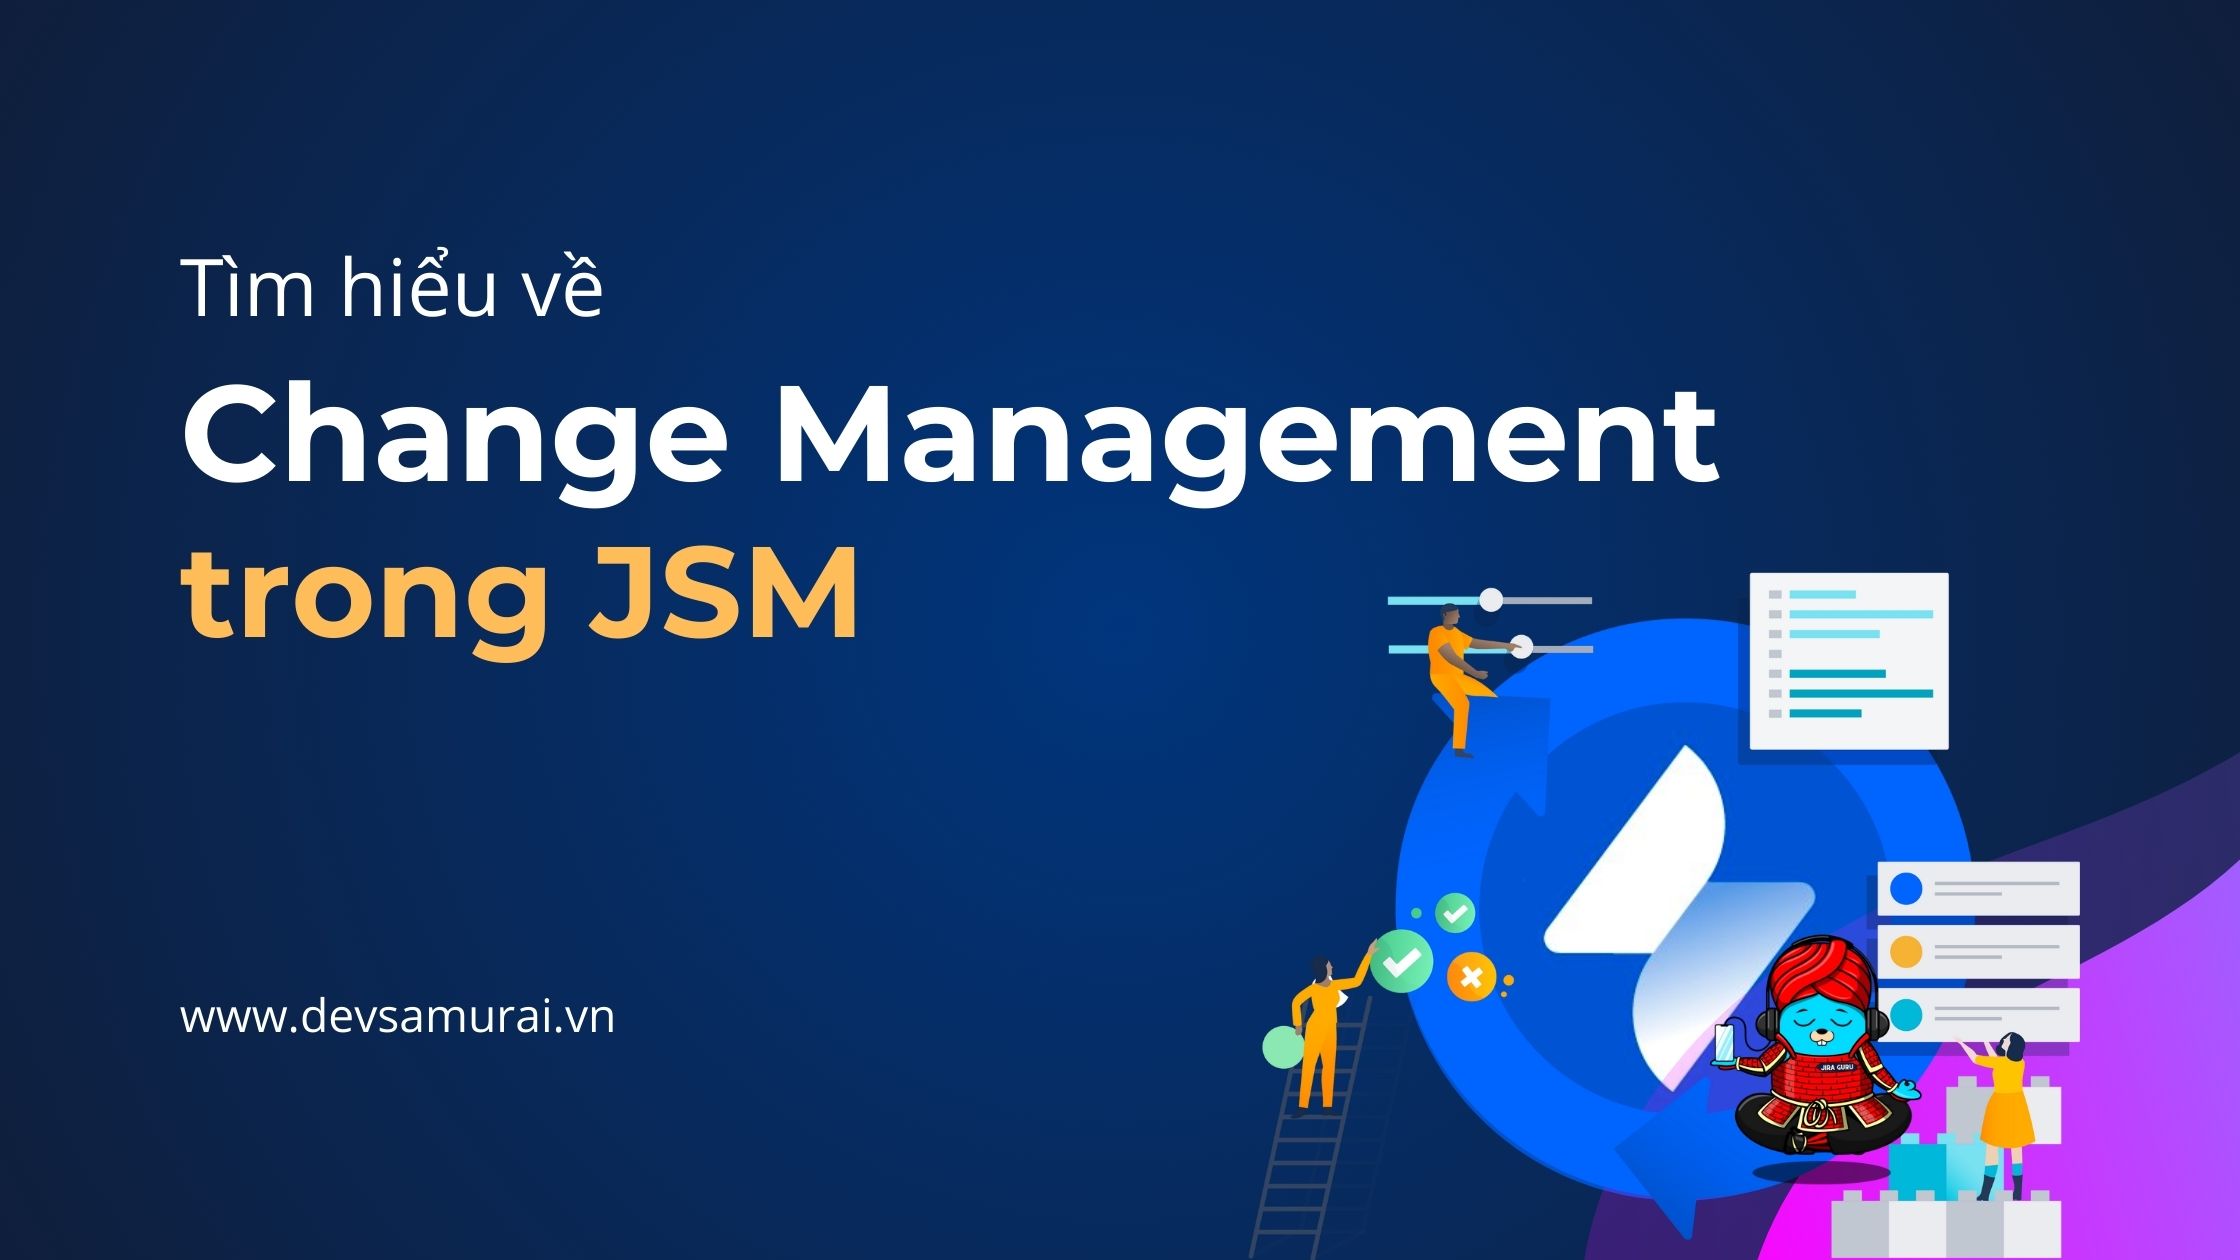 Change Management in Jira Service Management